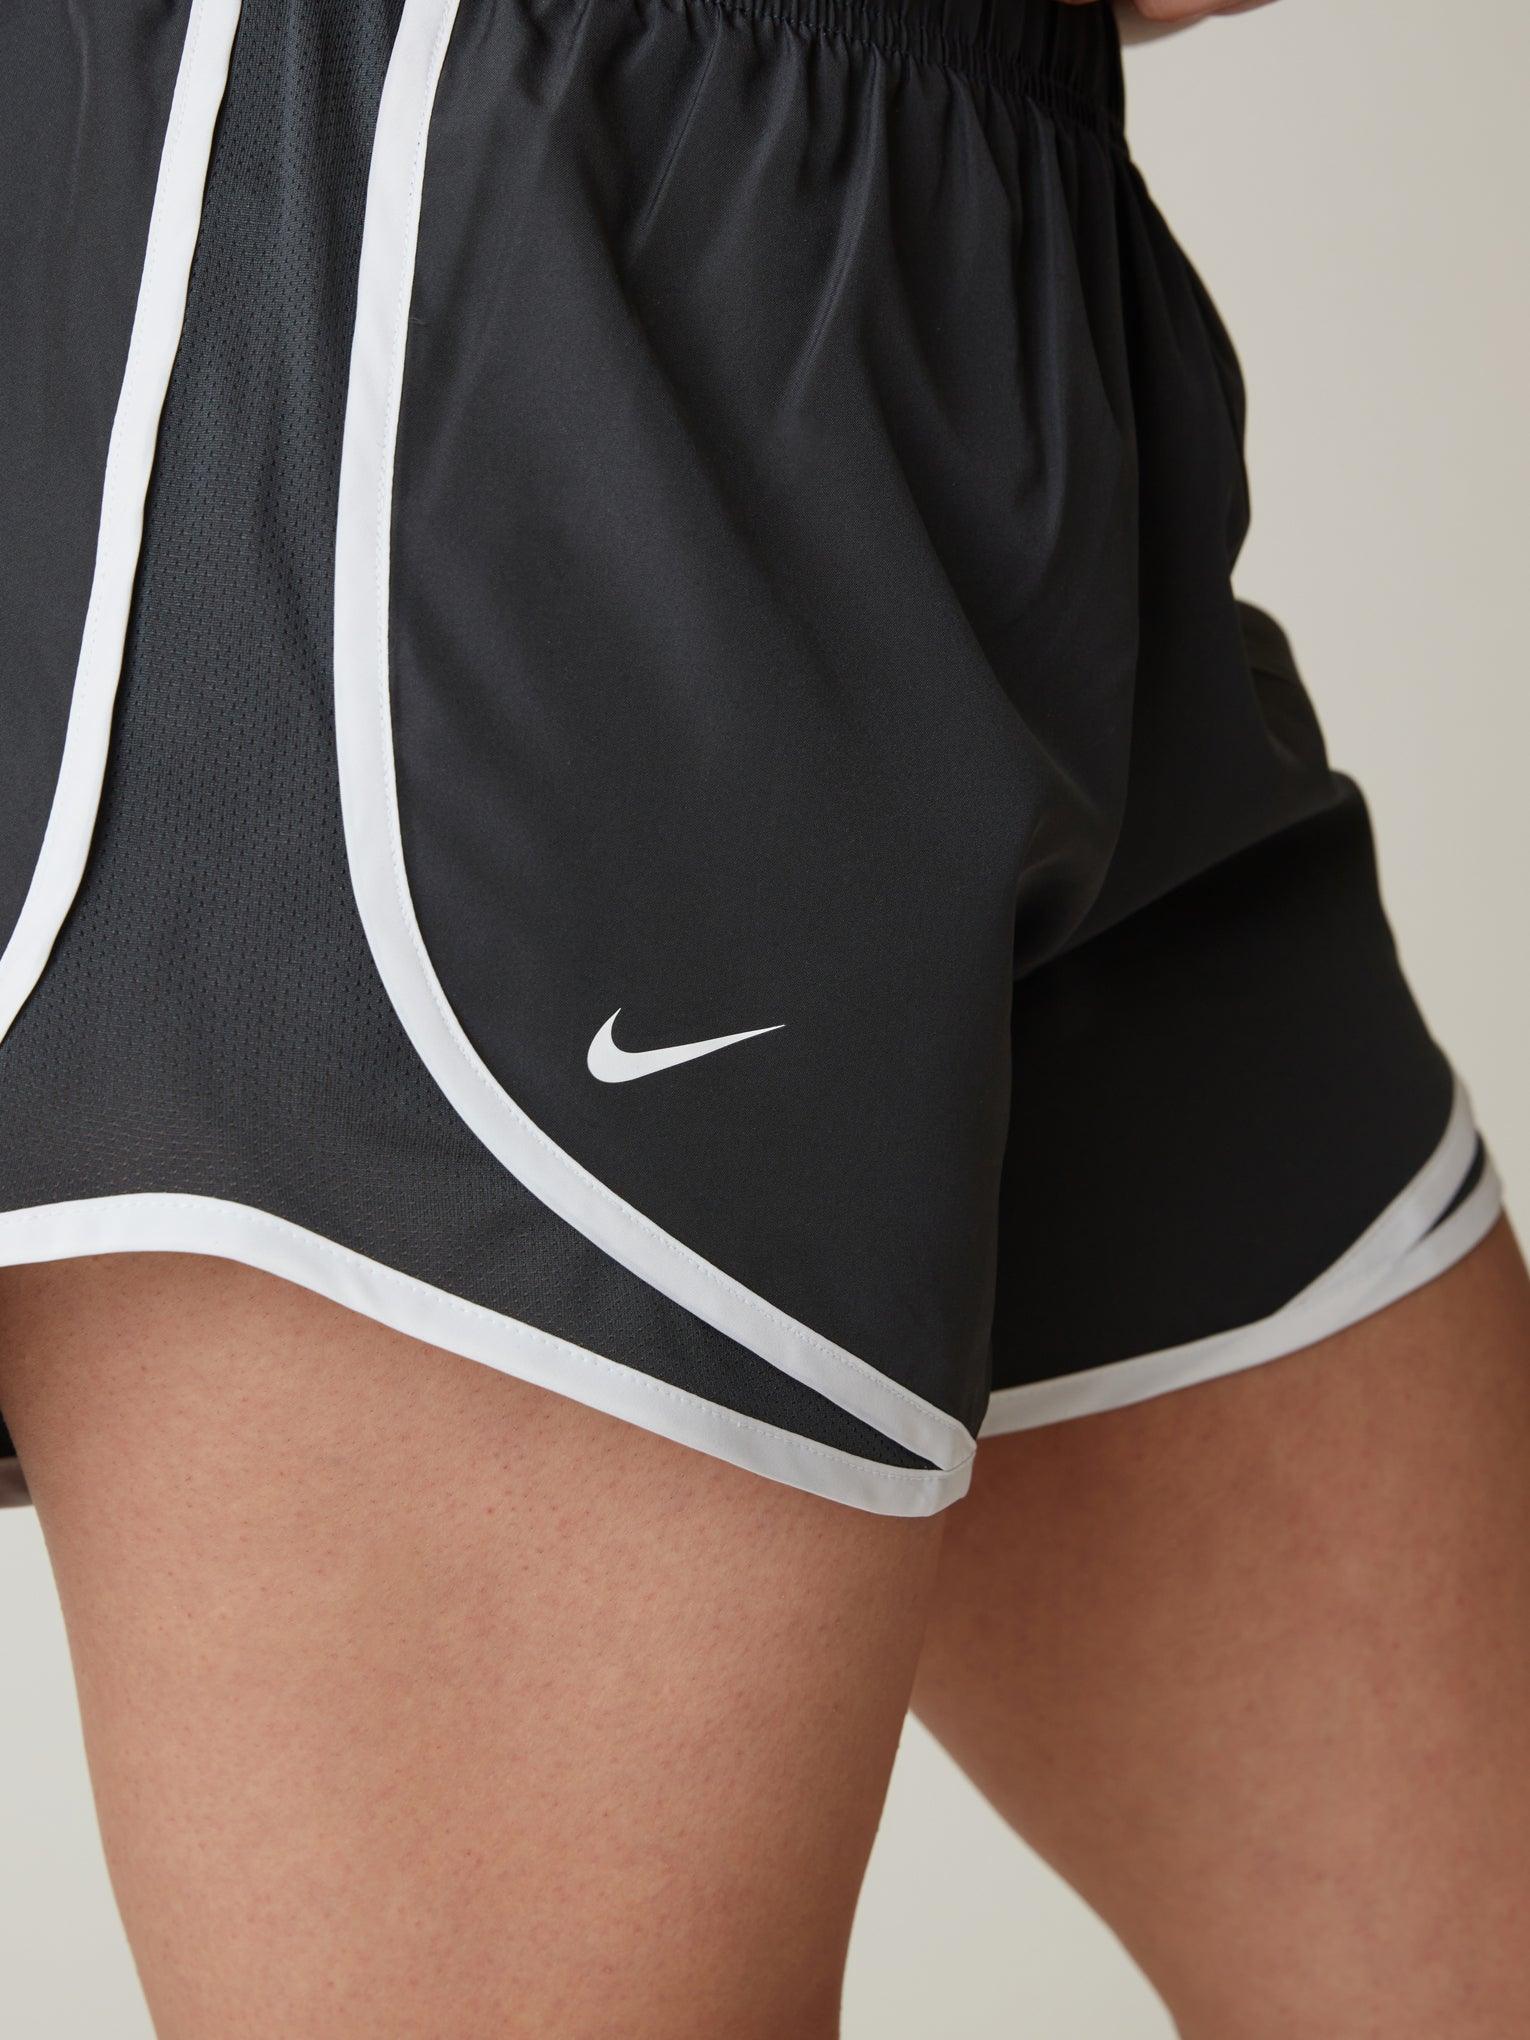 Nike Women's Shorts – The Harvard Shop